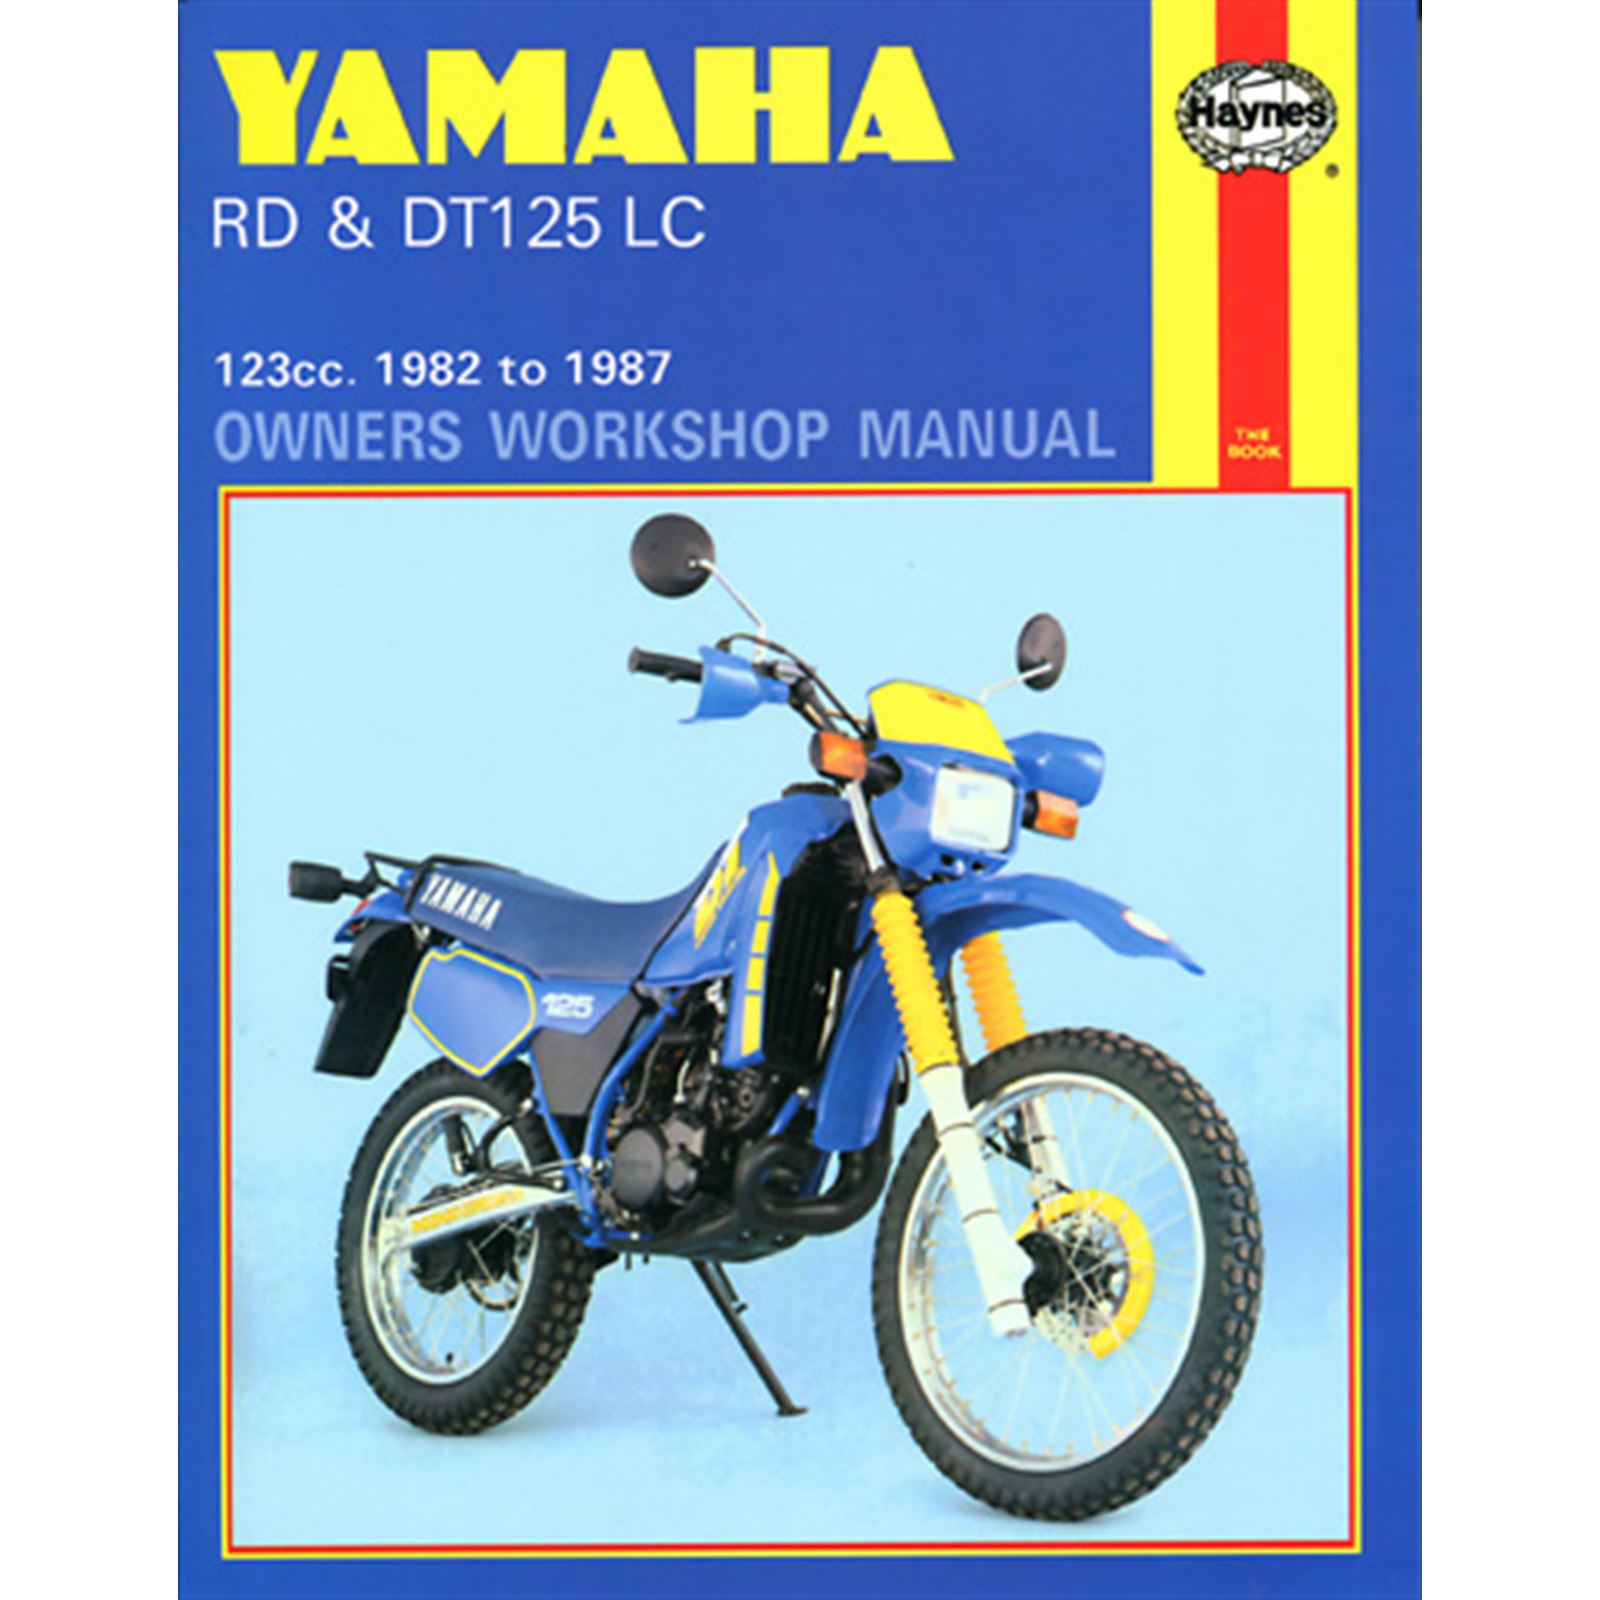 Haynes Manuals Service and Repair Manual for Yamaha